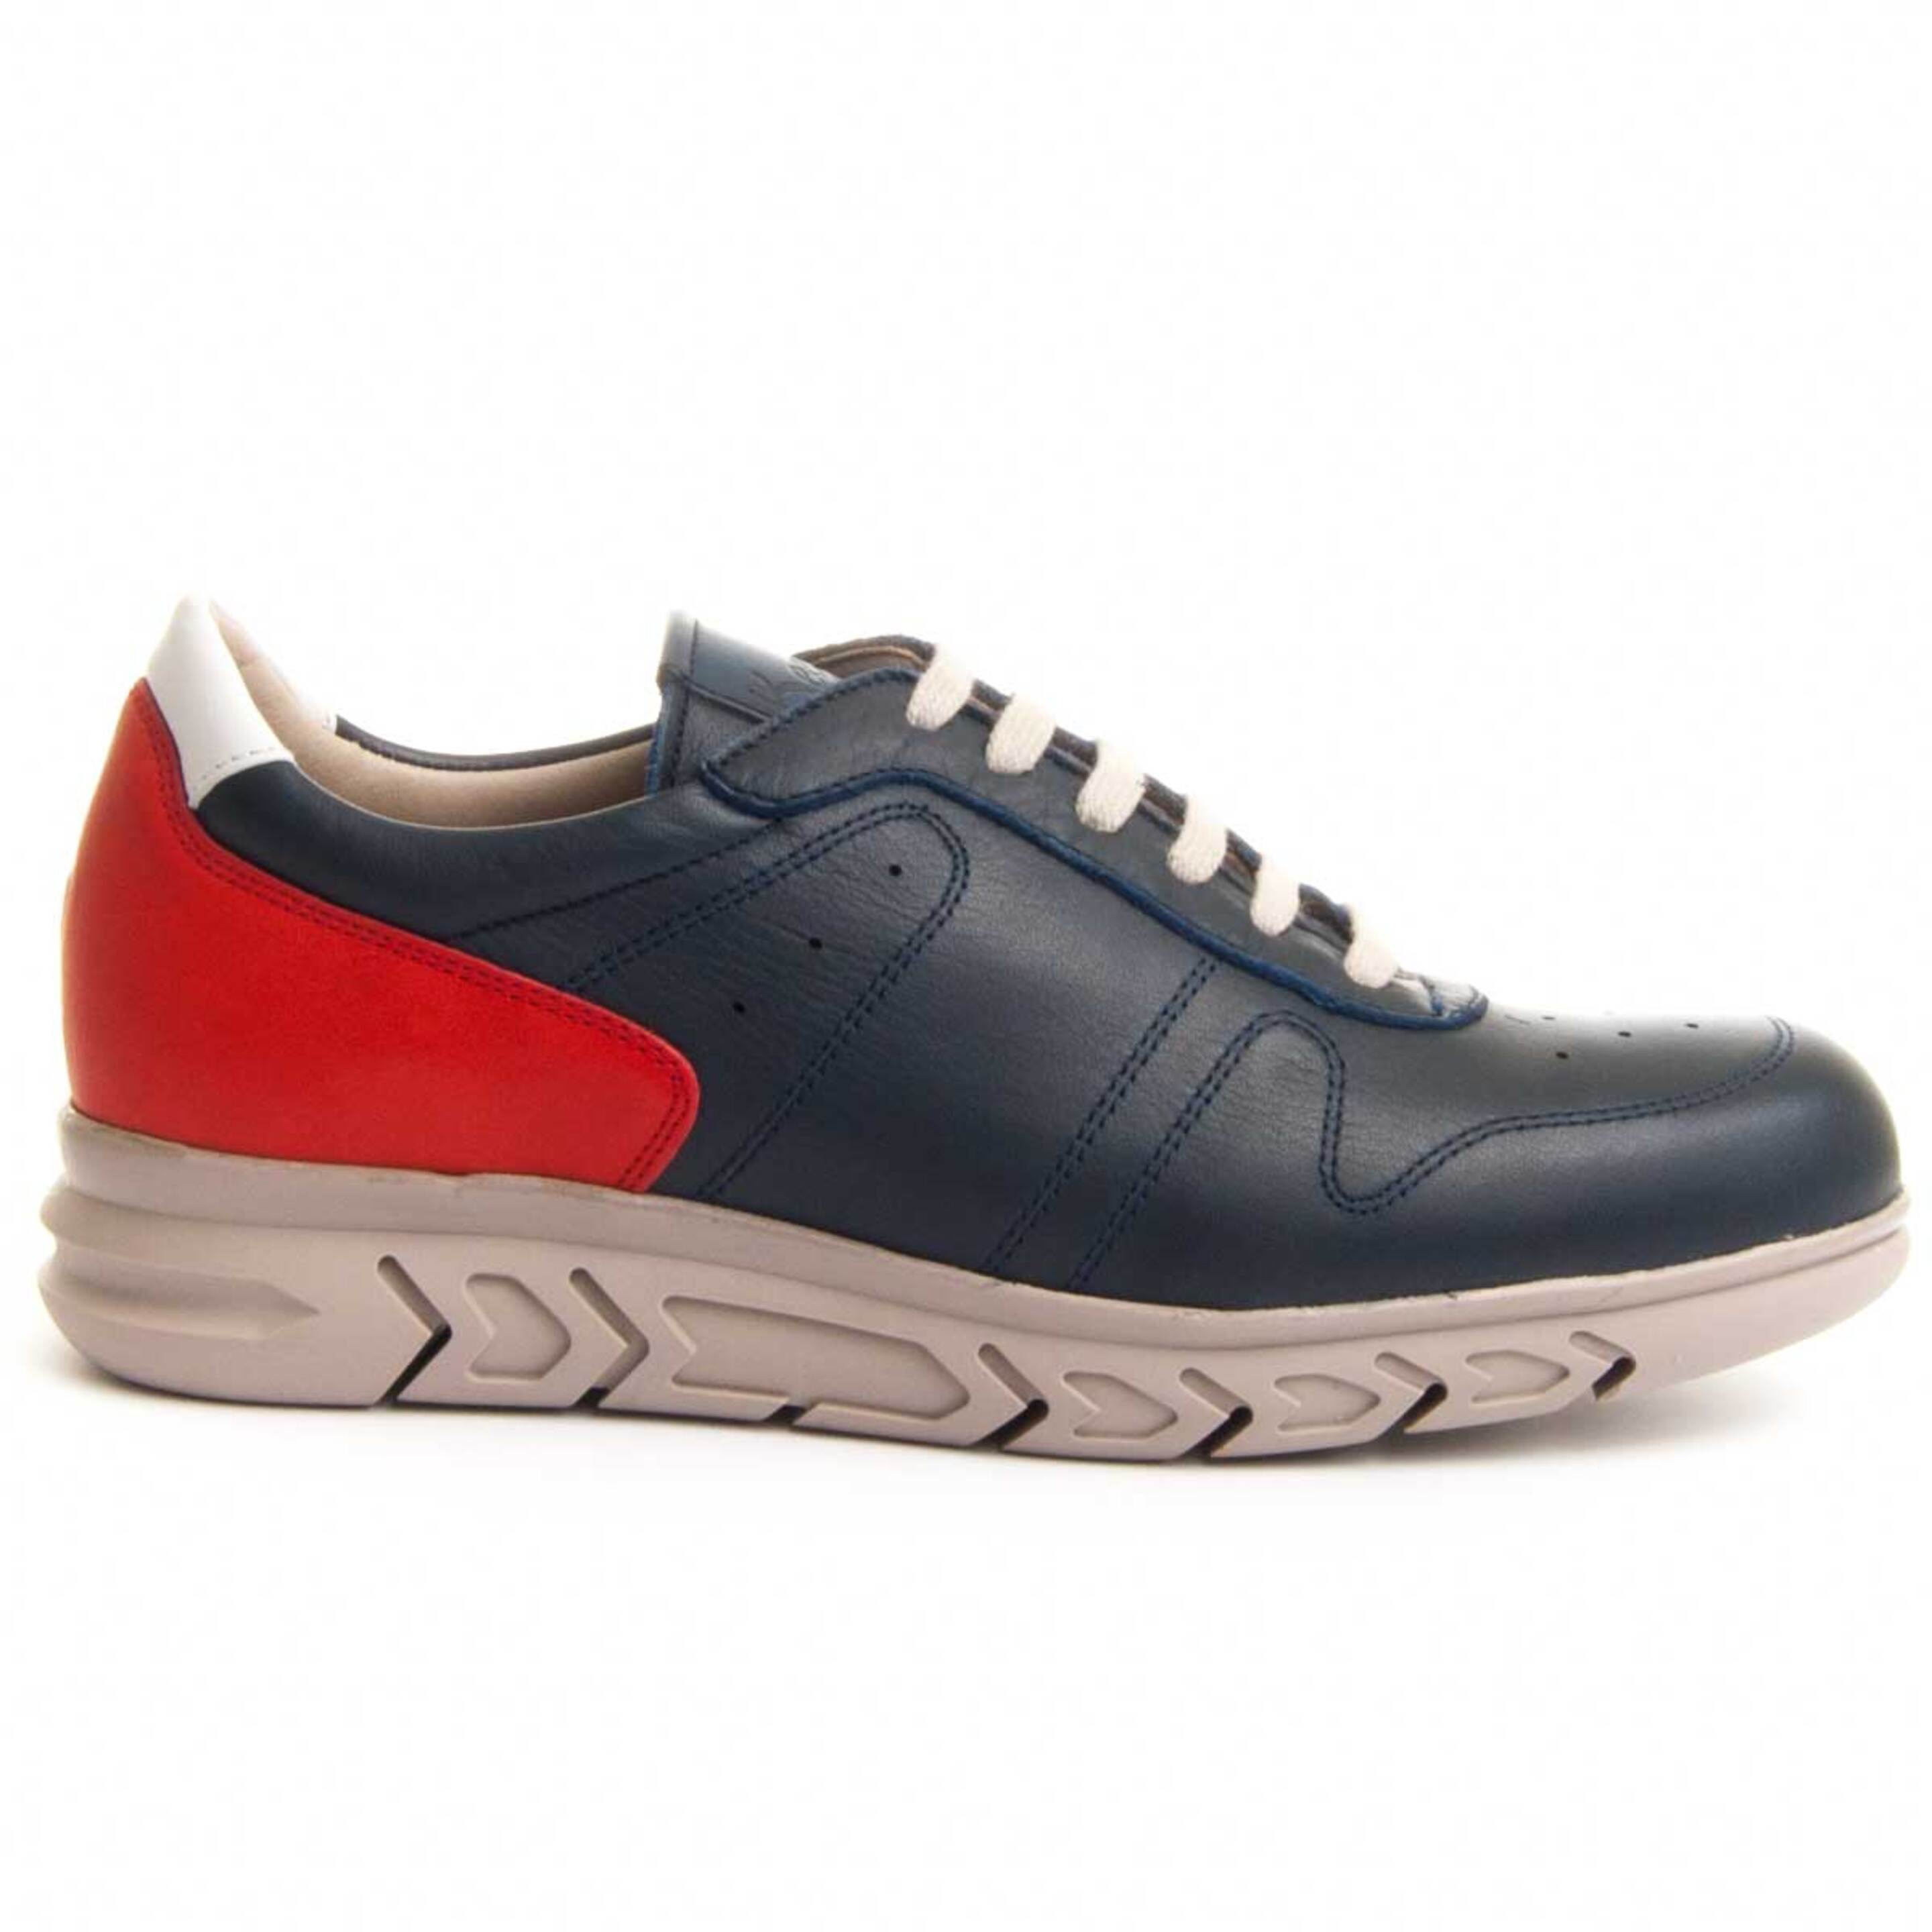 Sneaker Confortable Piel Fibersport2 Purapiel